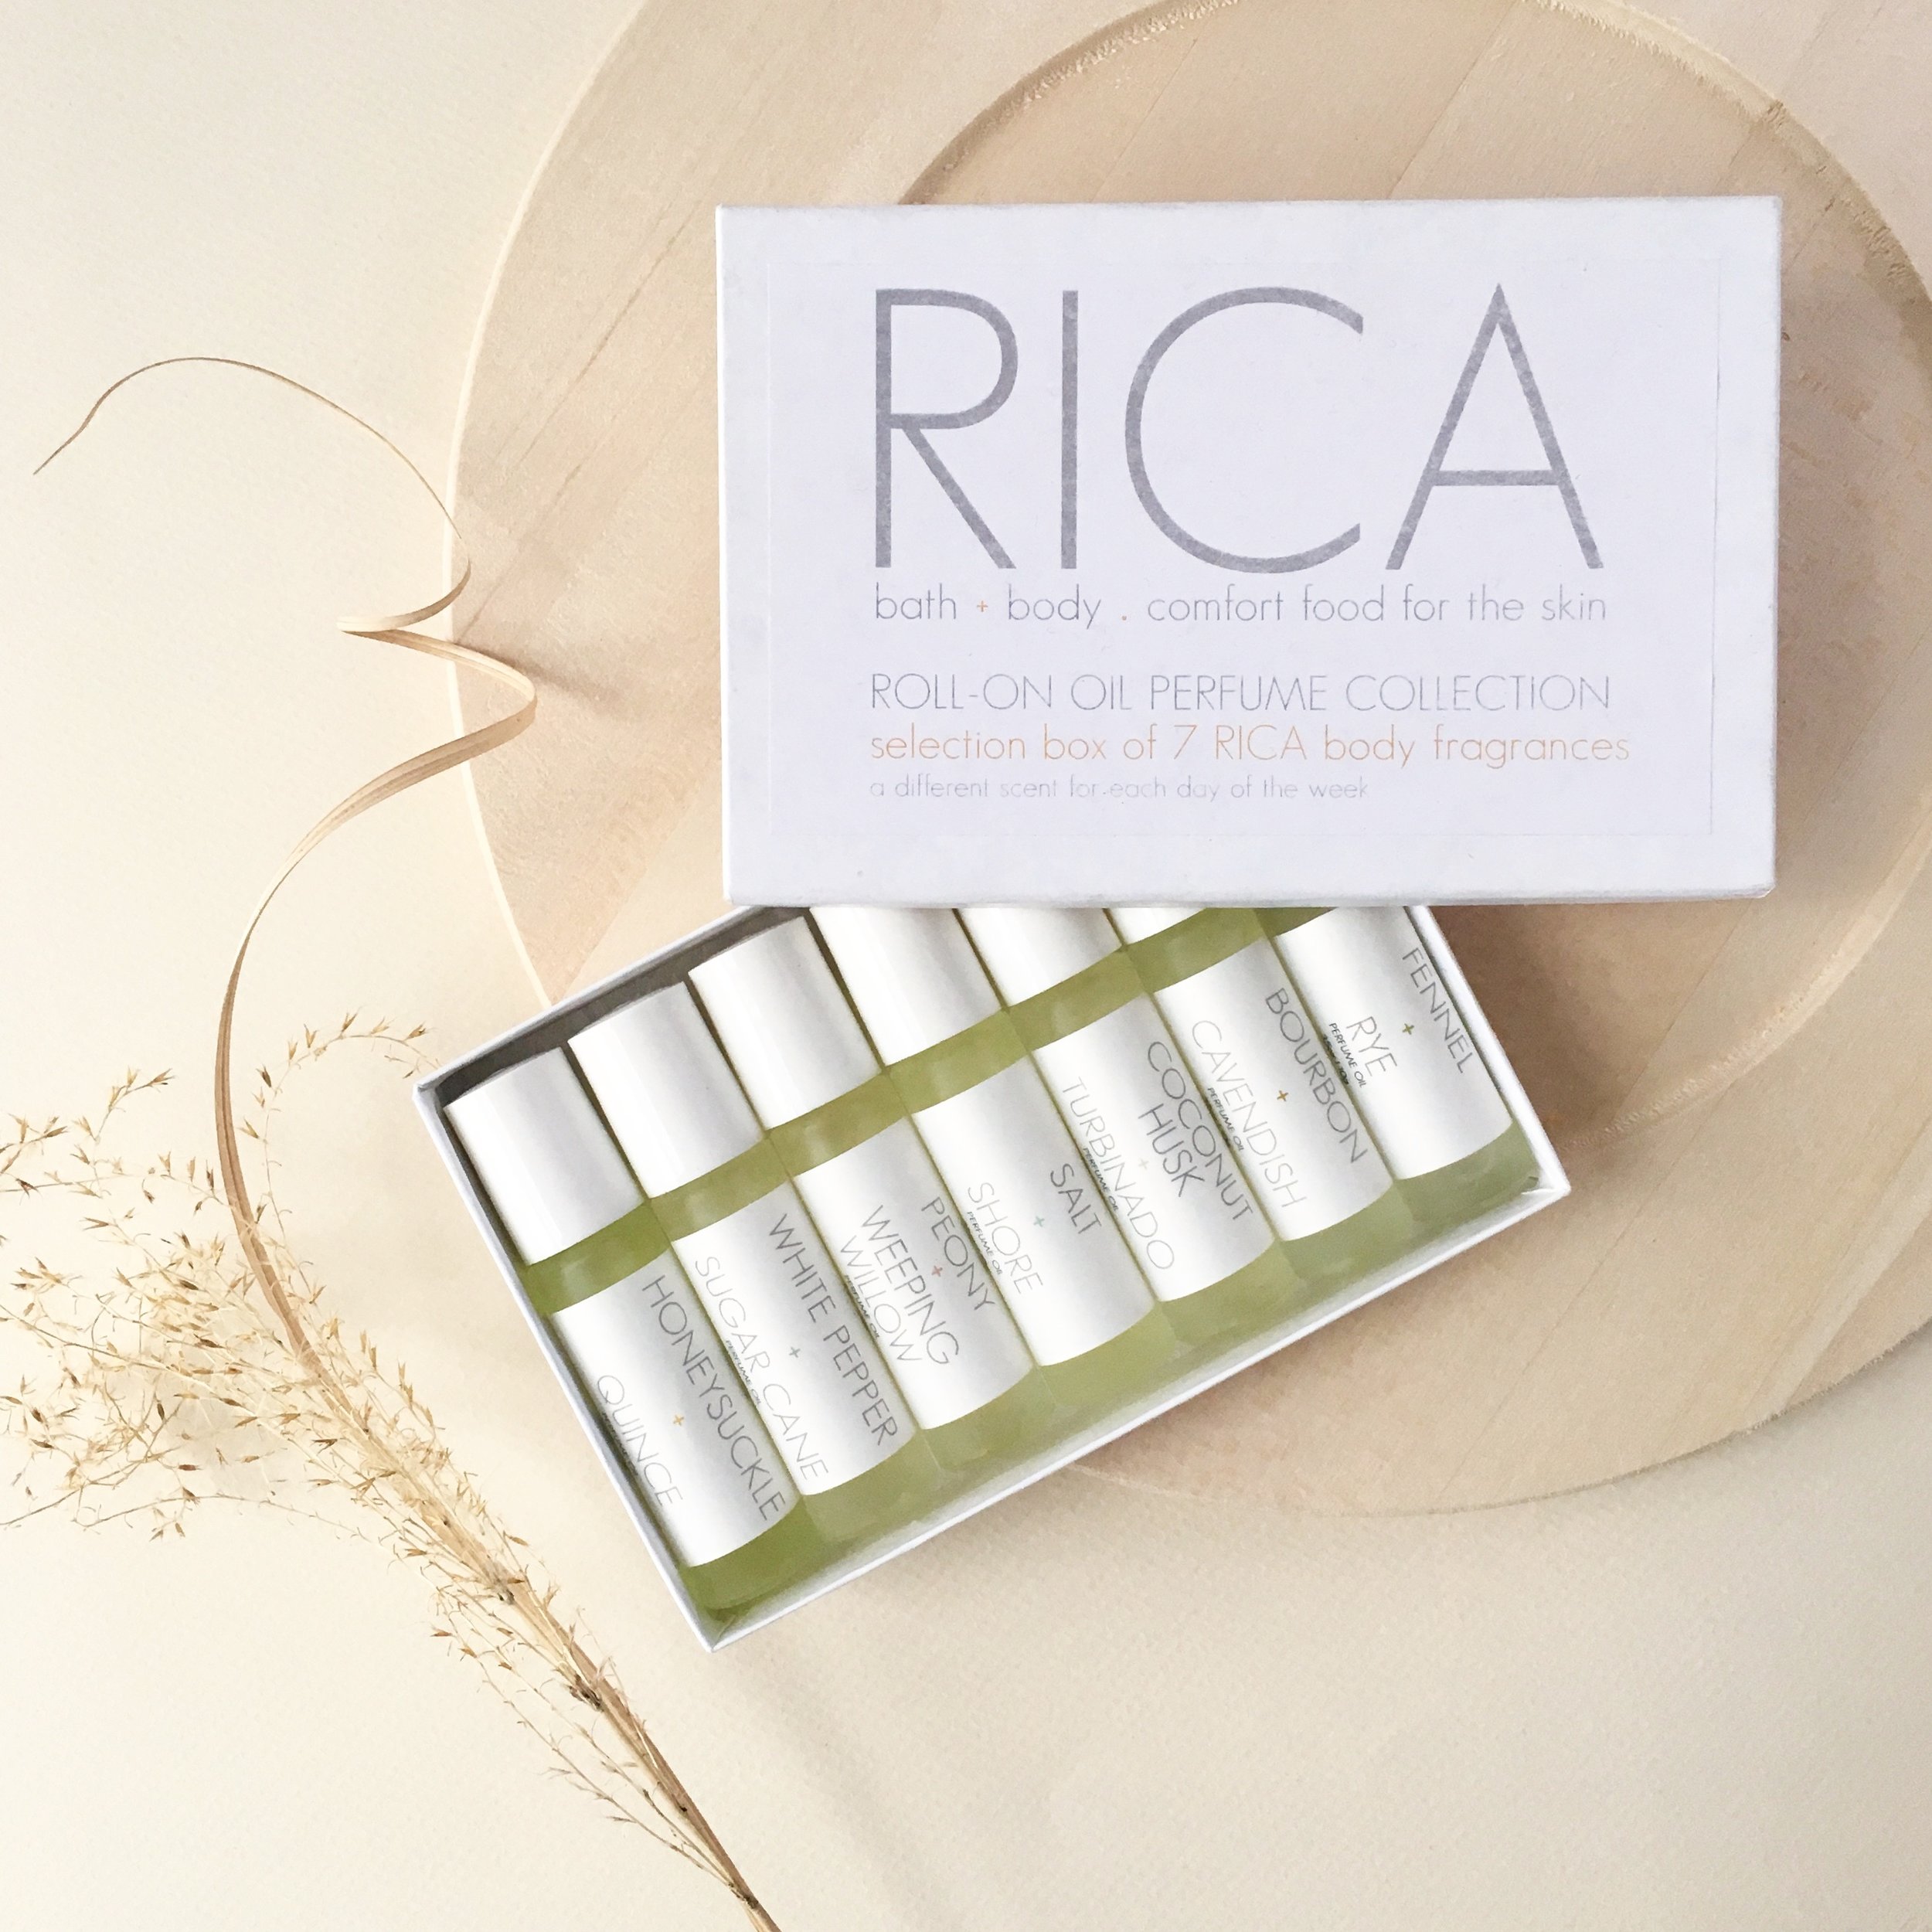 RICA bath + body Roll On Perfume Oil Collection Box.JPG